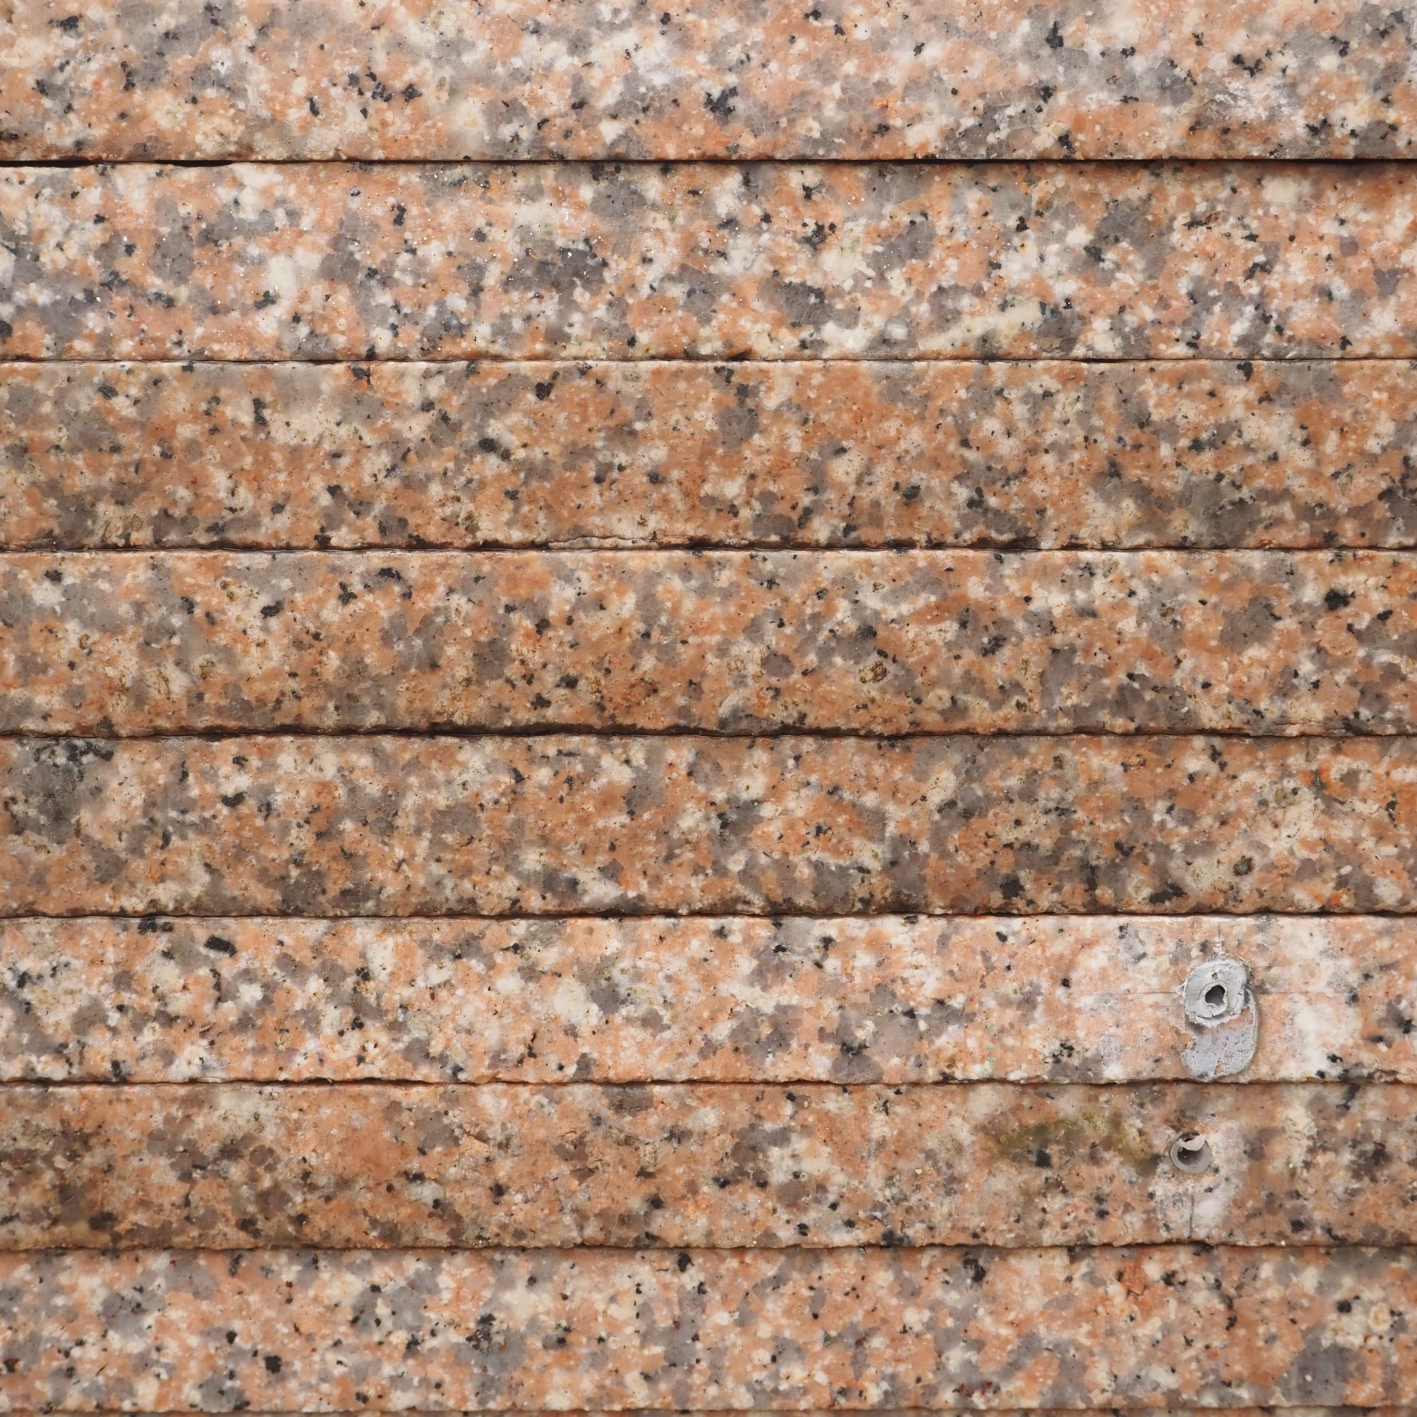 Red granite slab (66,5 x 66,5 cm) - Sold per m2